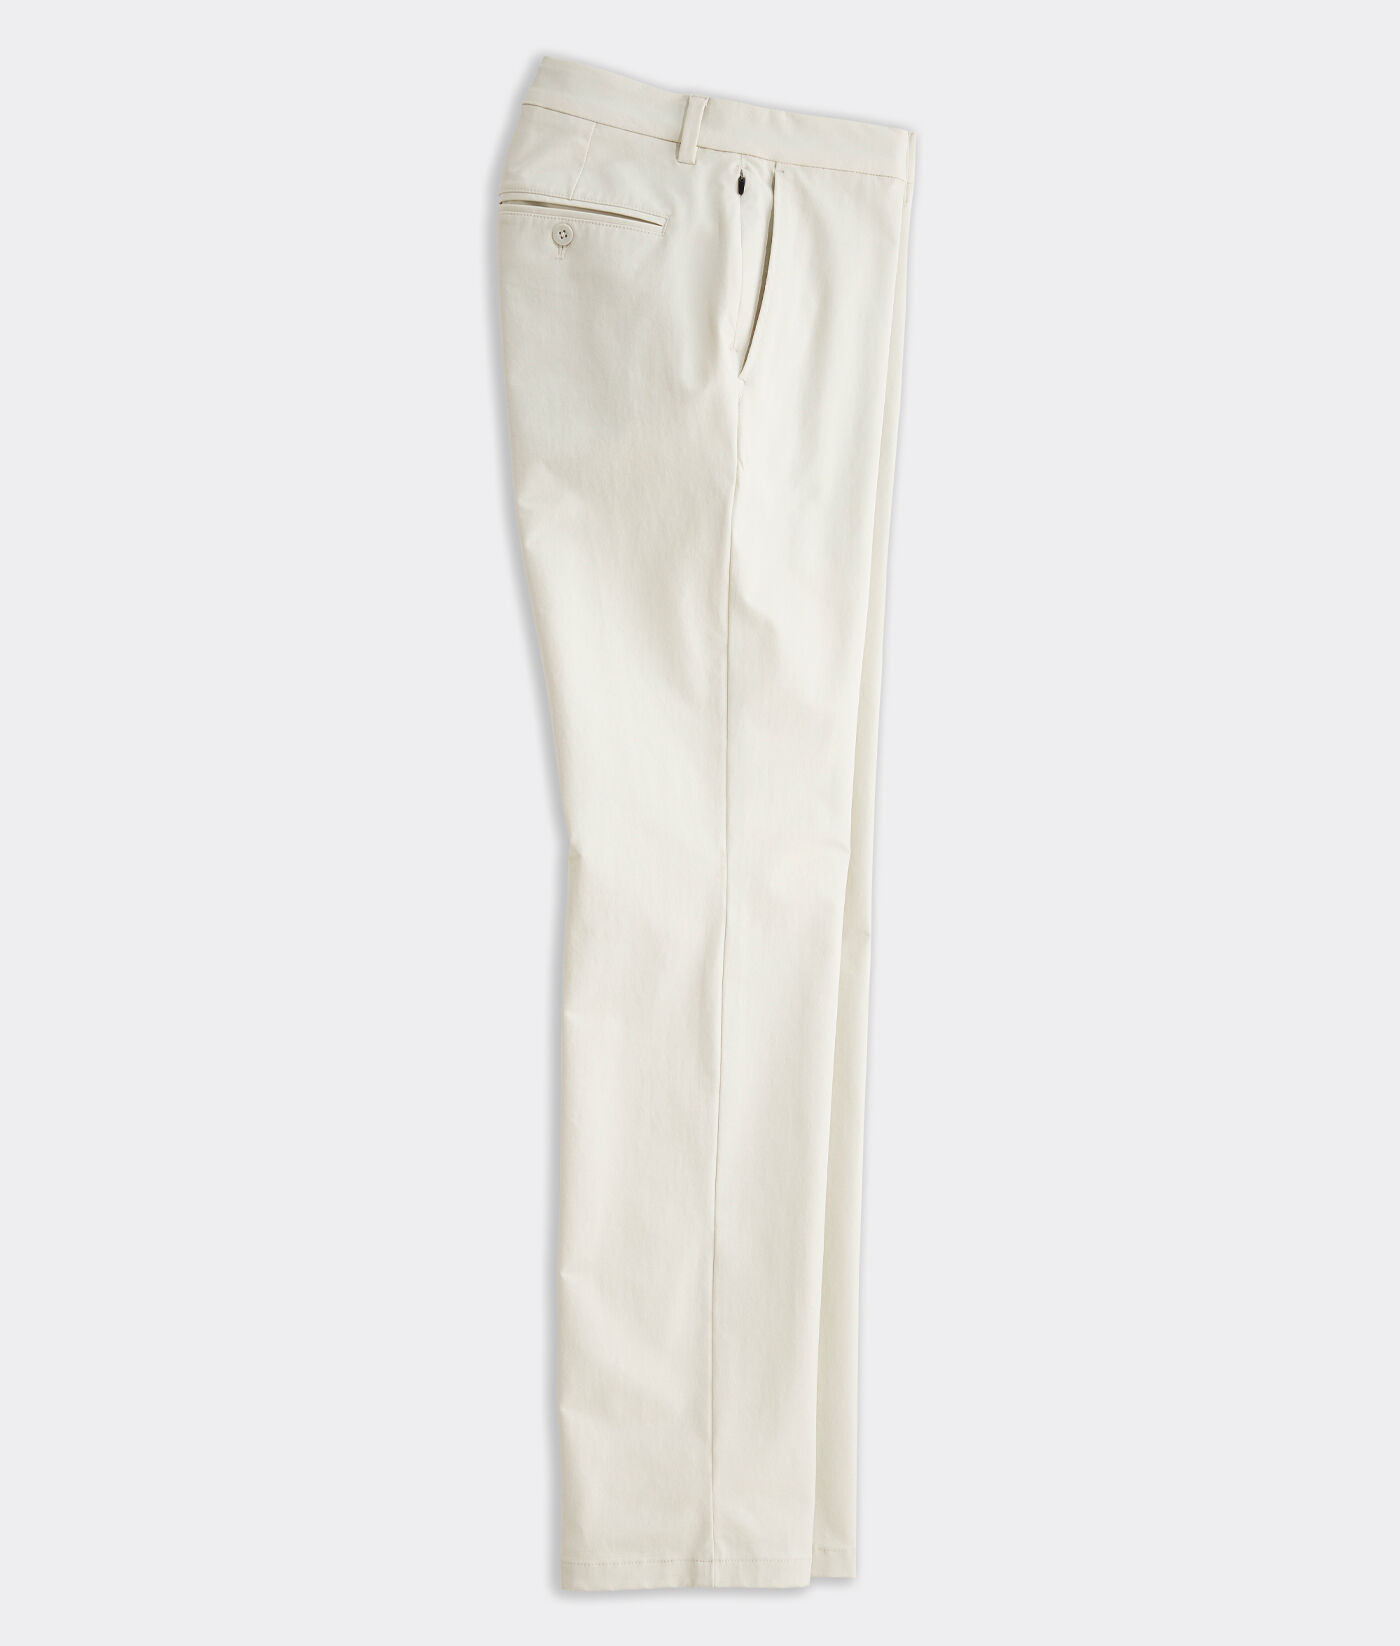 HSMQHJWE Mens Stretch Dress Pants Big Tall Pants Mens Fashion Casual Loose  Cotton Plus Size Pocket Lace Up Elastic Waist Pants Trousers - Walmart.com